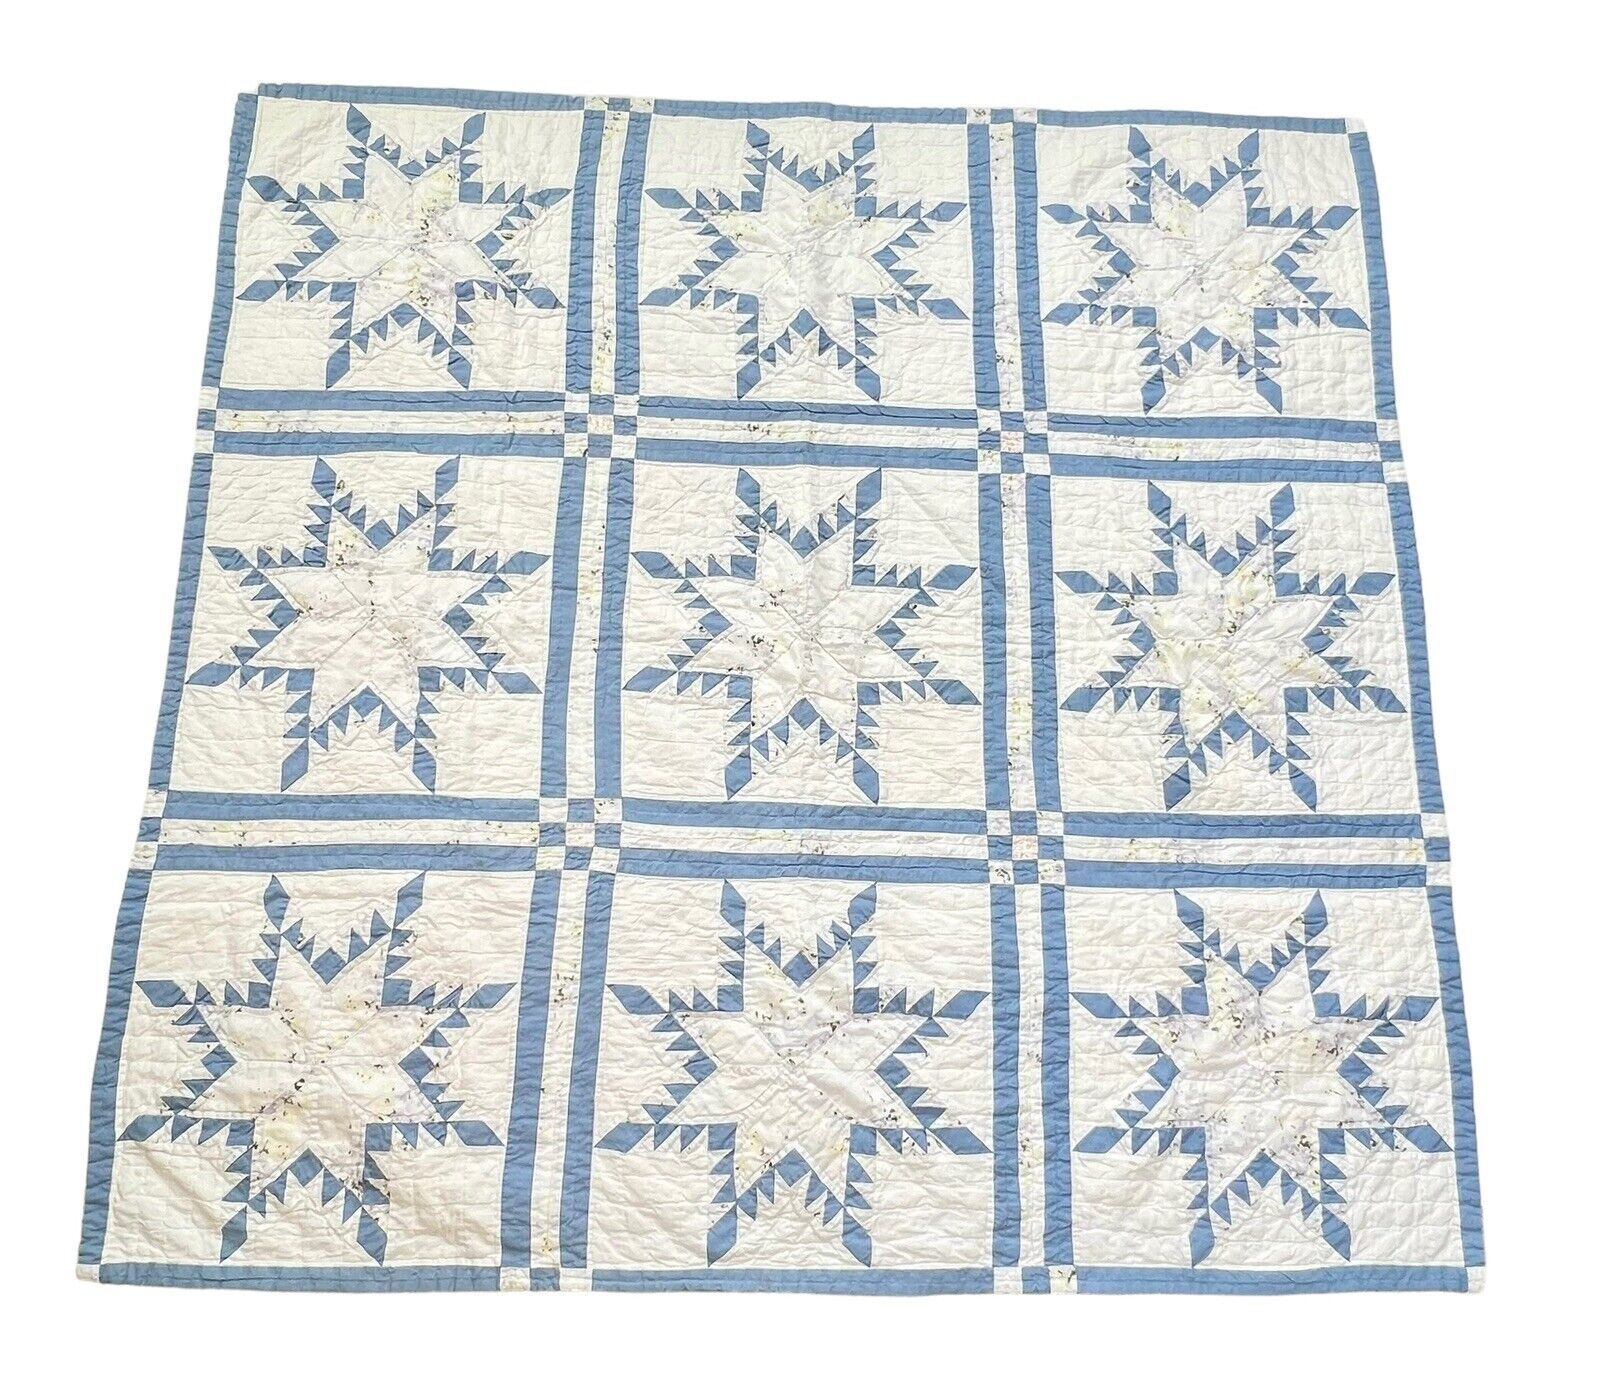 Vintage Blue White Star Pattern Square Quilt 52”x52” Baby Nursery Blanket Throw